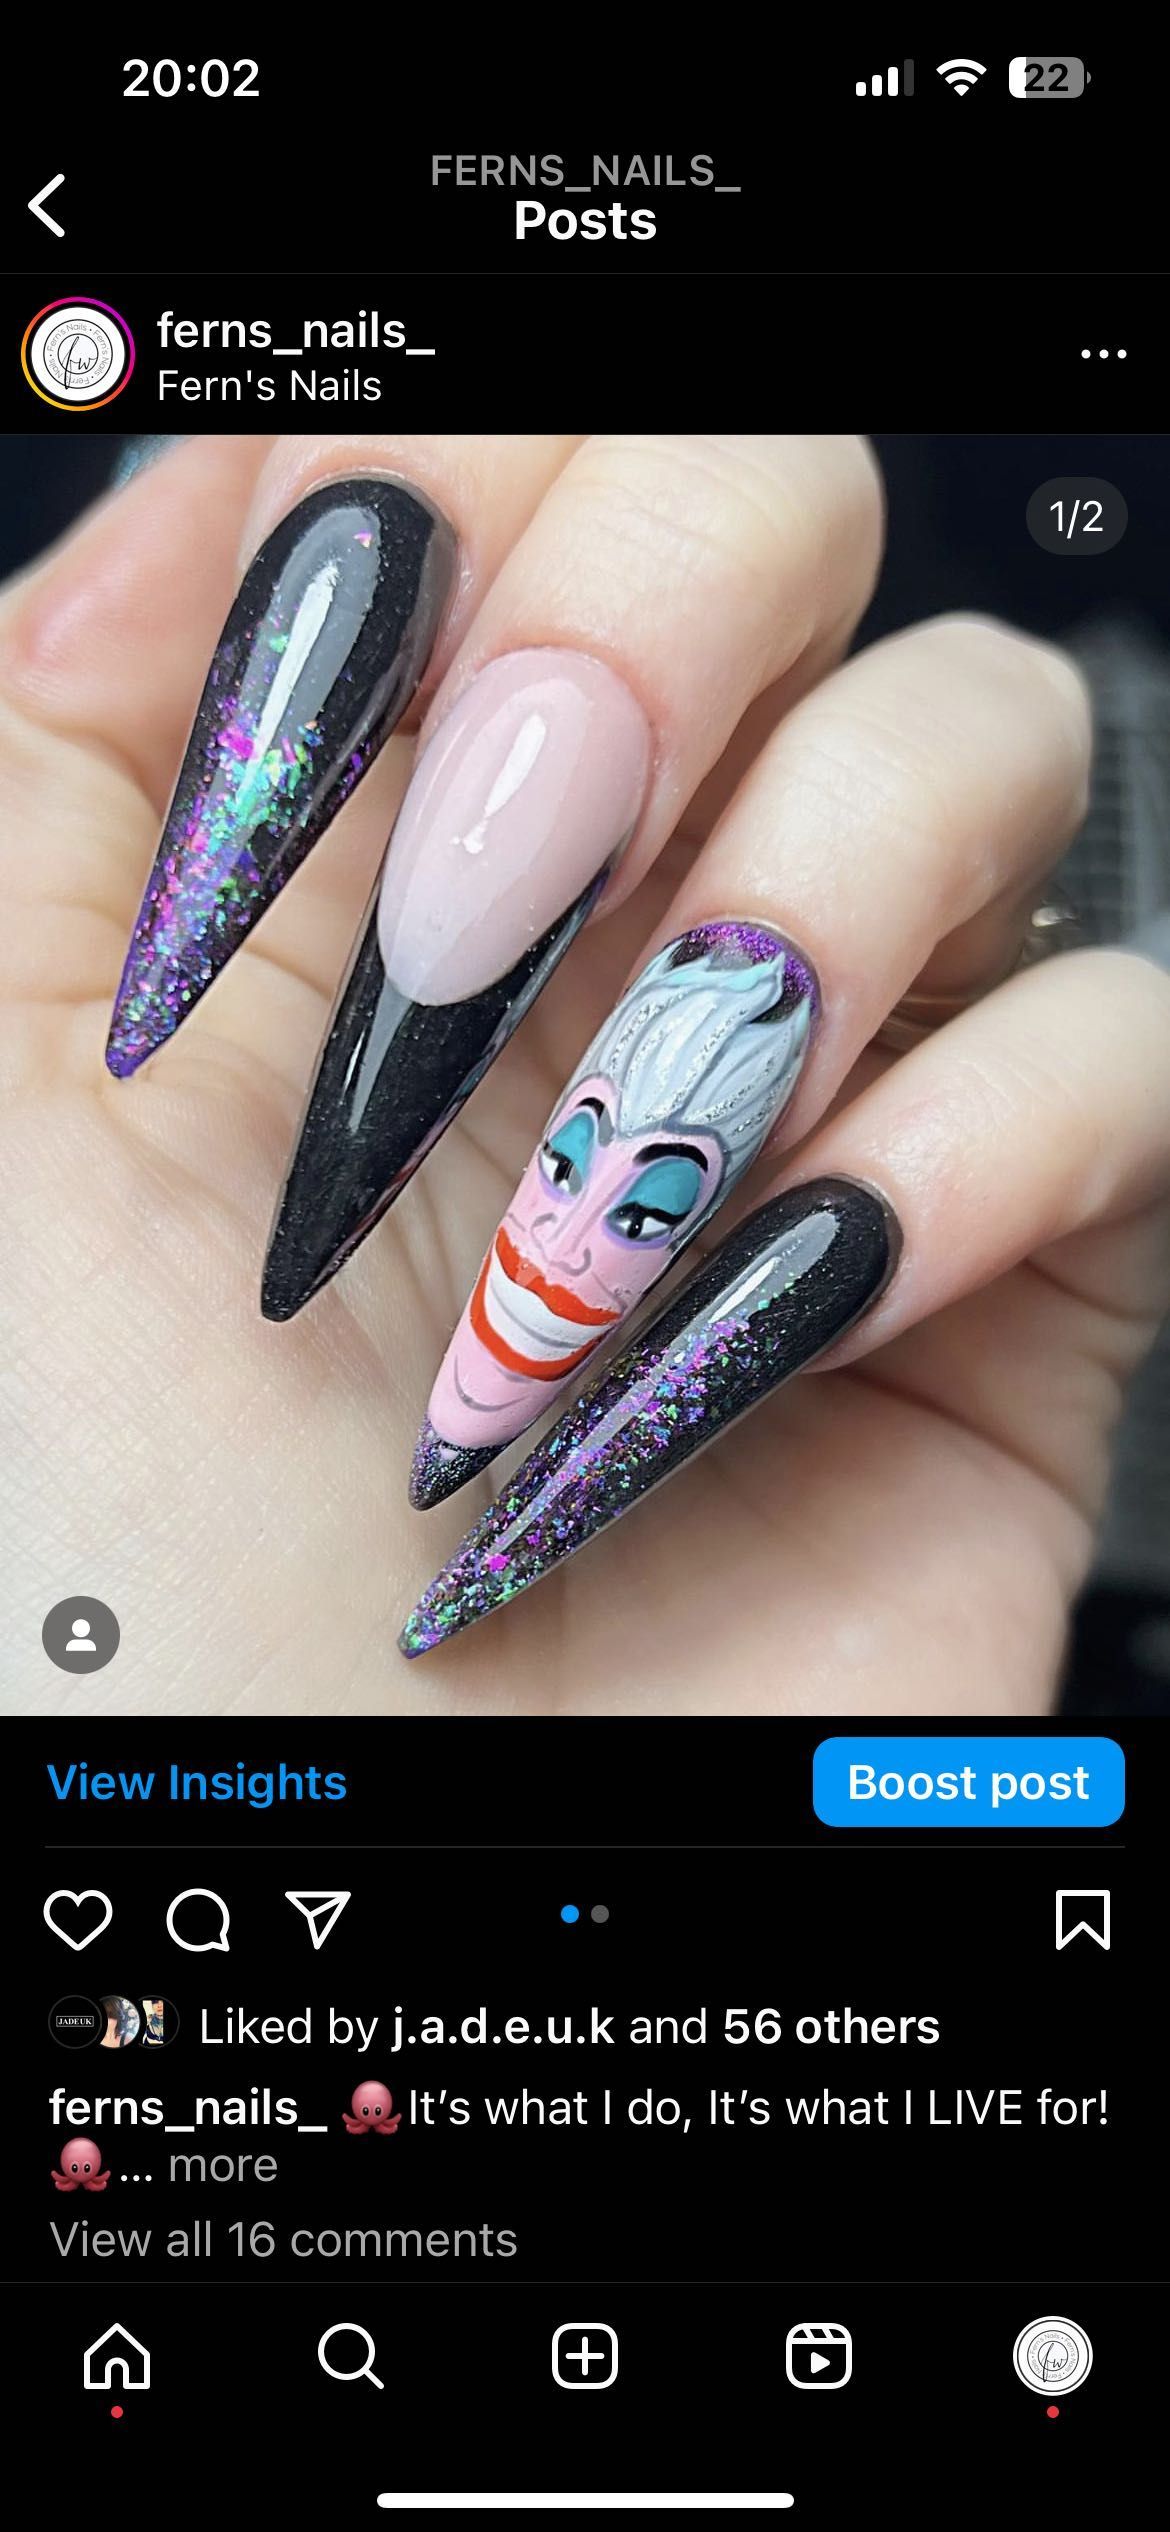 “Instagram” nails portfolio